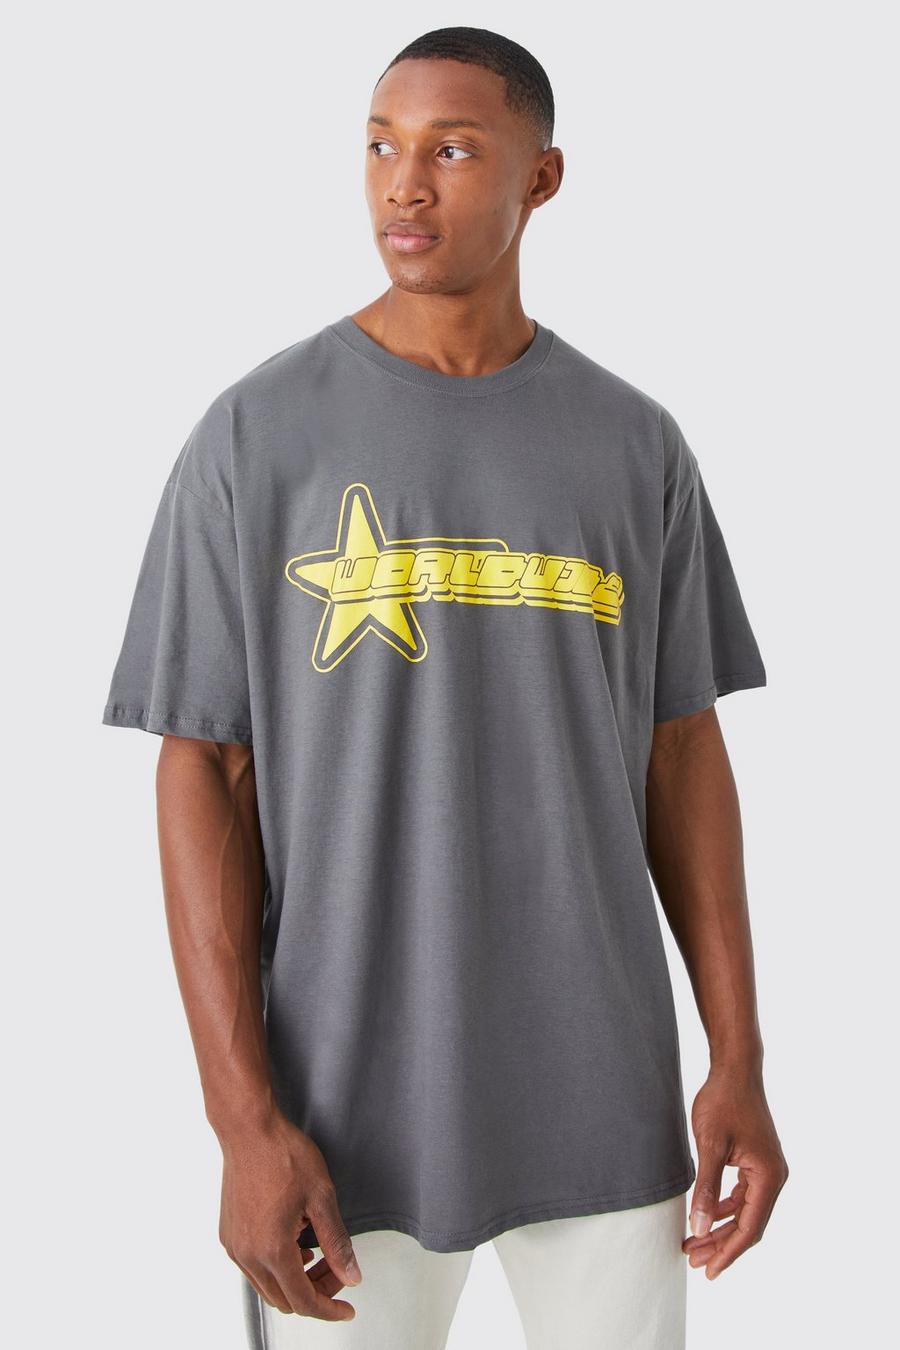 Charcoal grey Oversized Worldwide Sterren T-Shirt